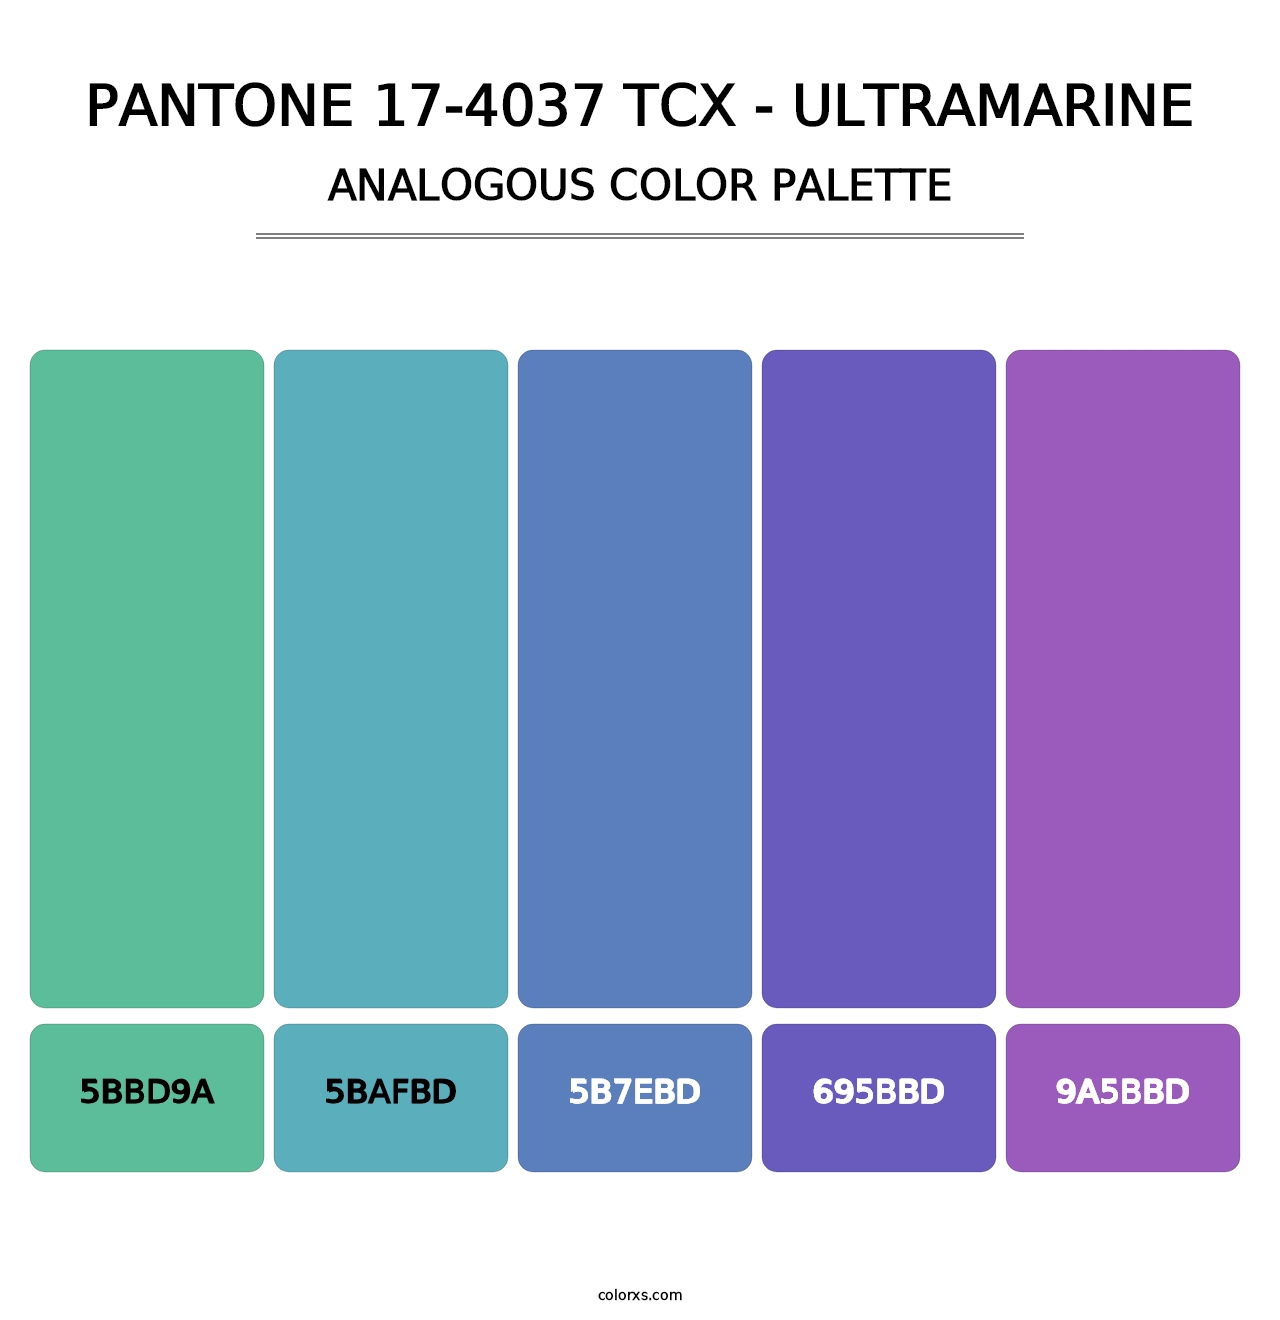 PANTONE 17-4037 TCX - Ultramarine - Analogous Color Palette